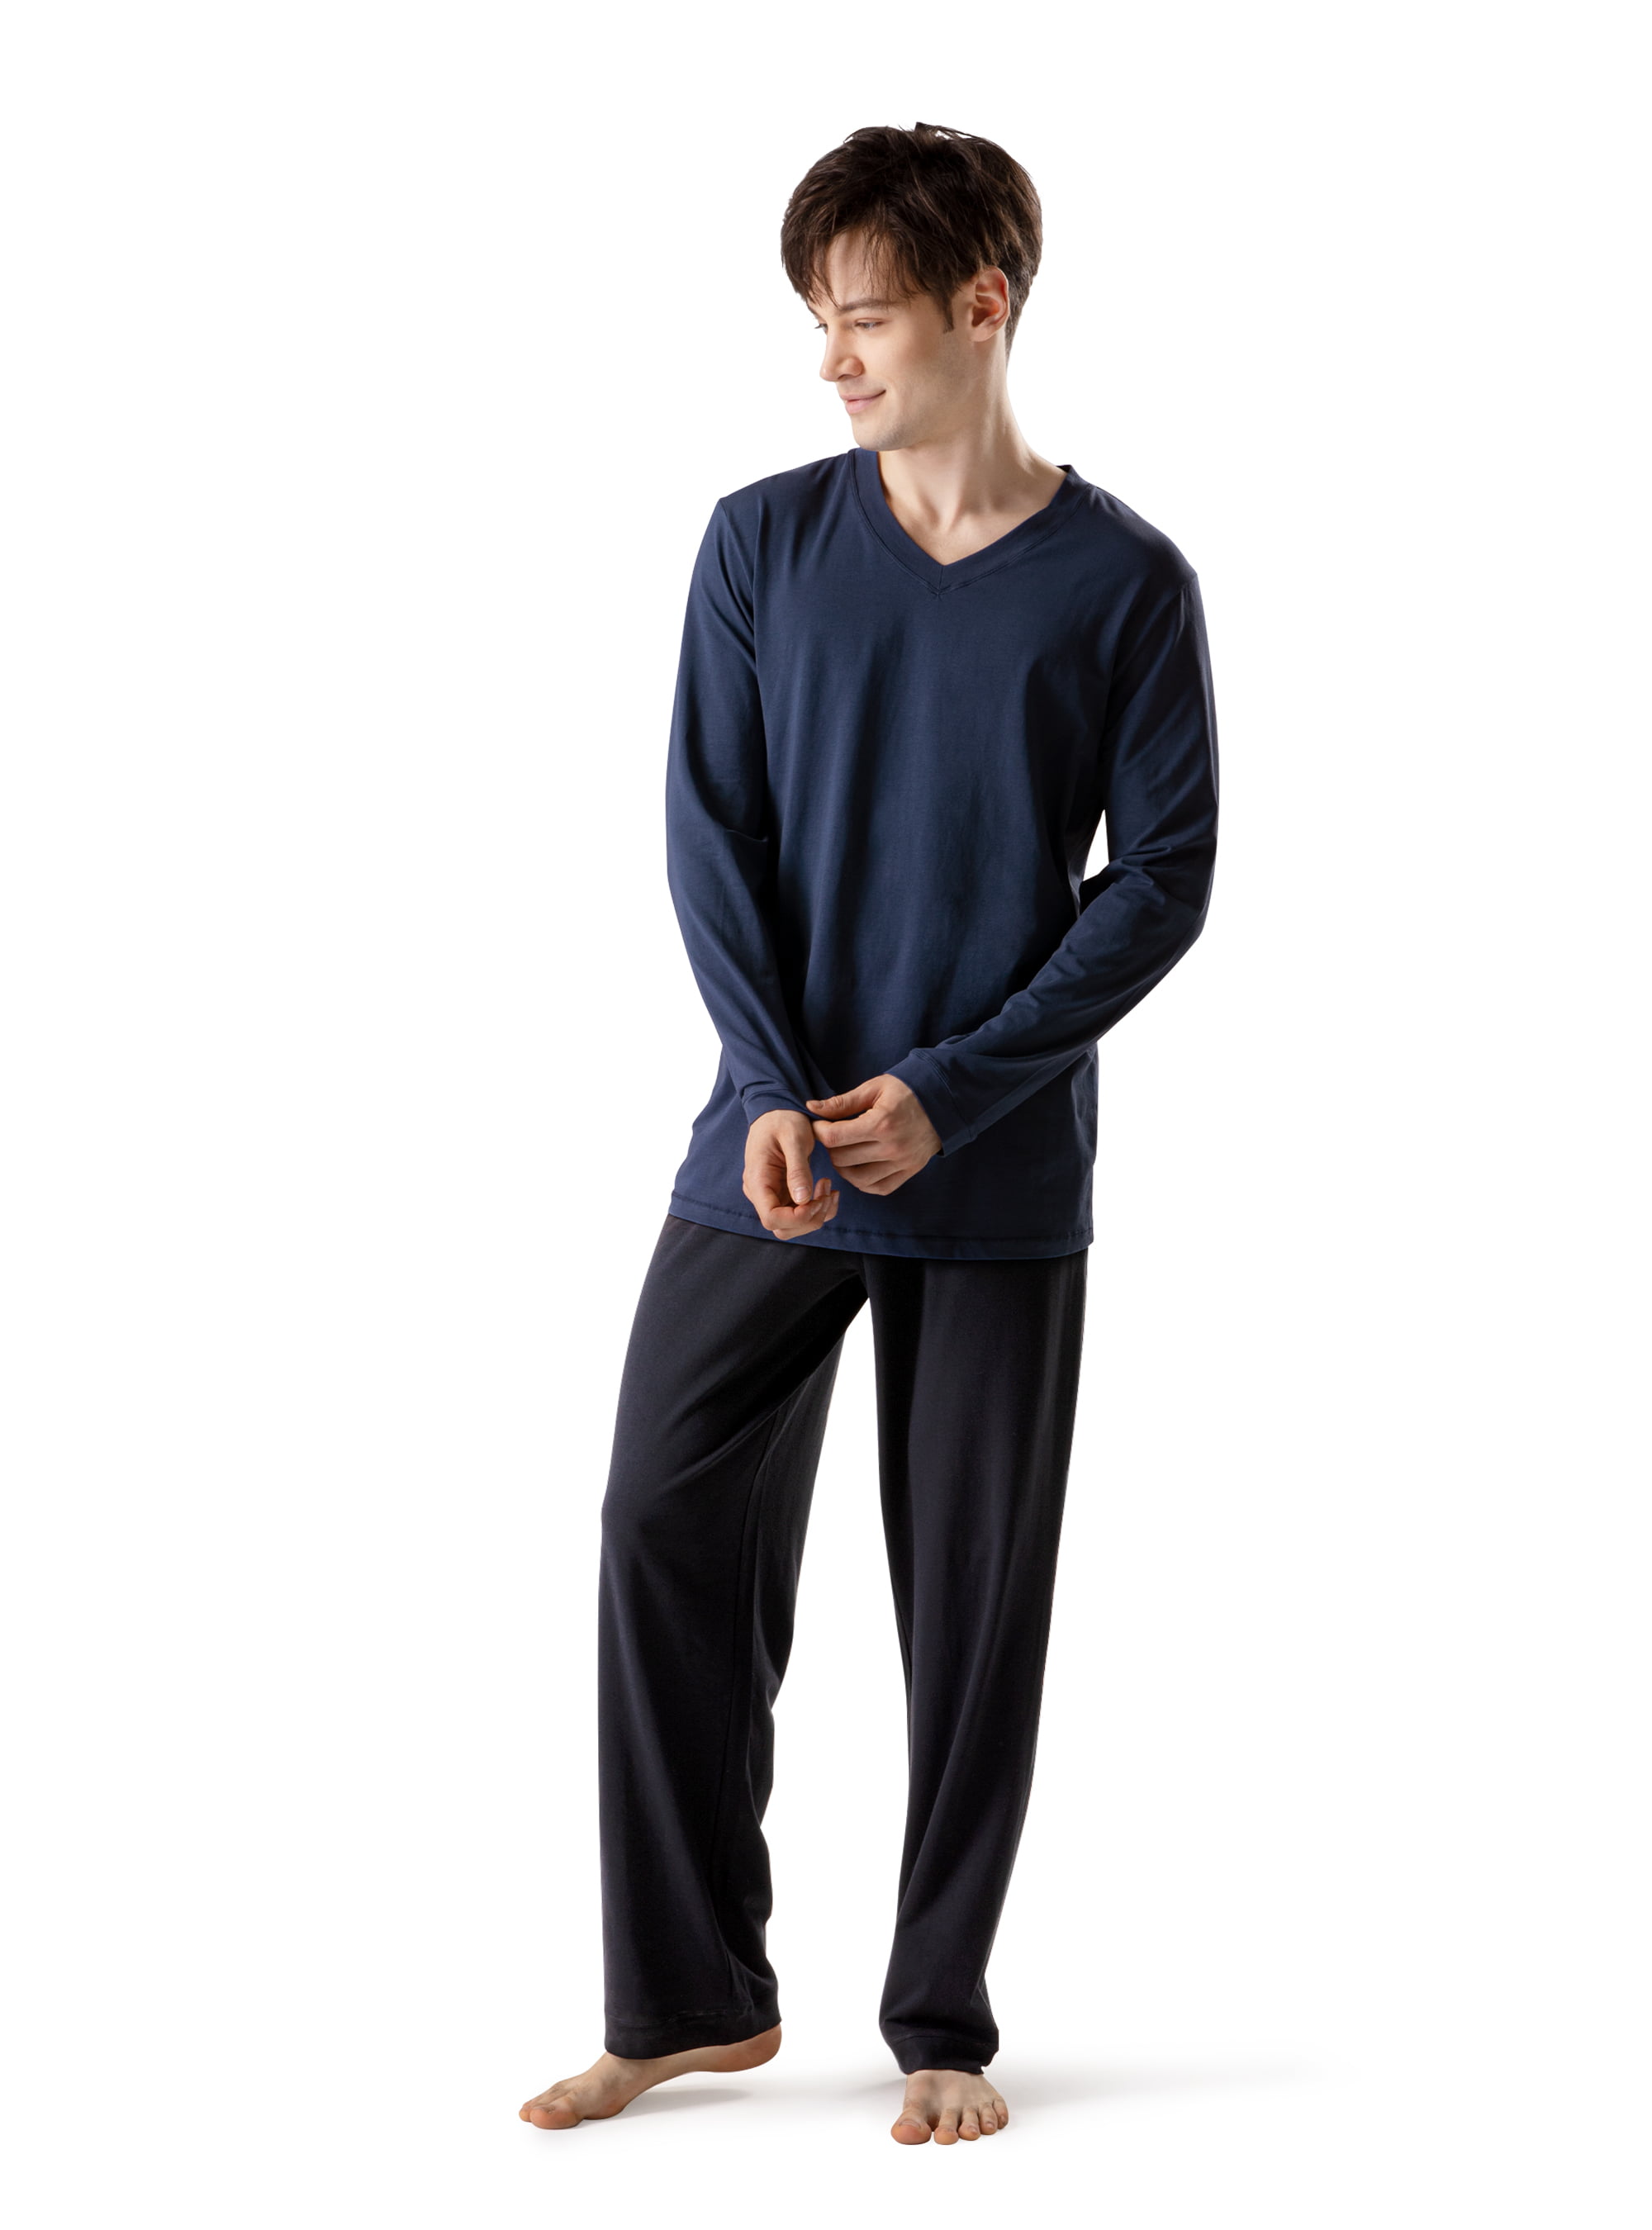 DAVID ARCHY Men's Pyjamas Lounge Pants Men's Loungewear Breathable and Comfortable Loungewear Bottoms